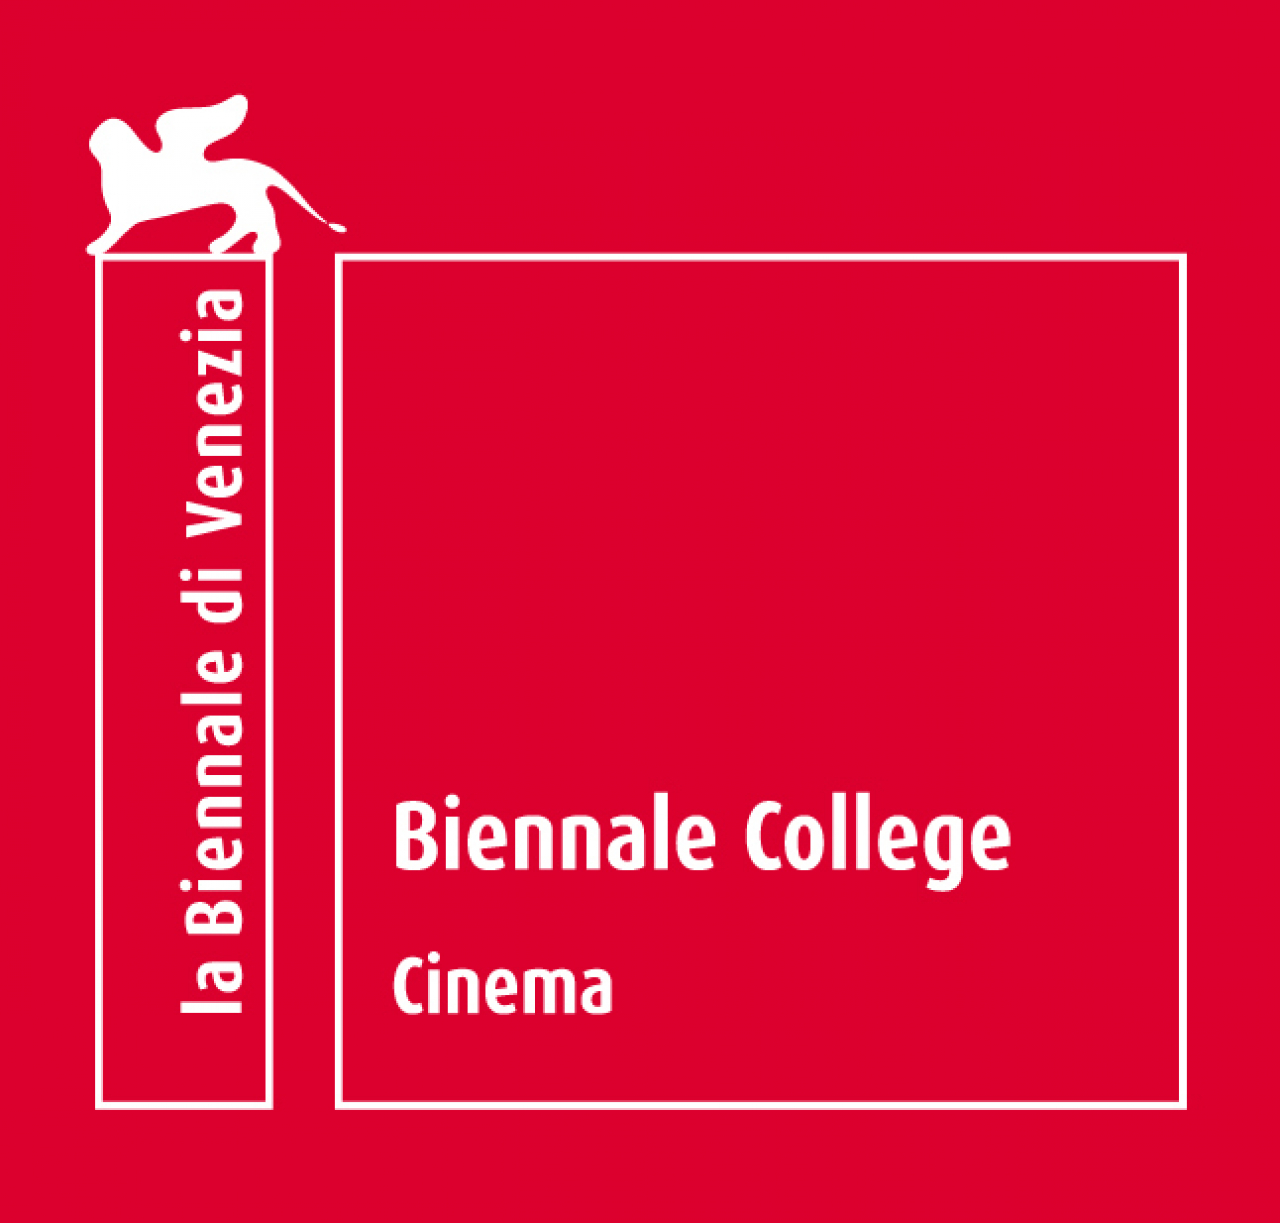 Biennale College Cinema - International